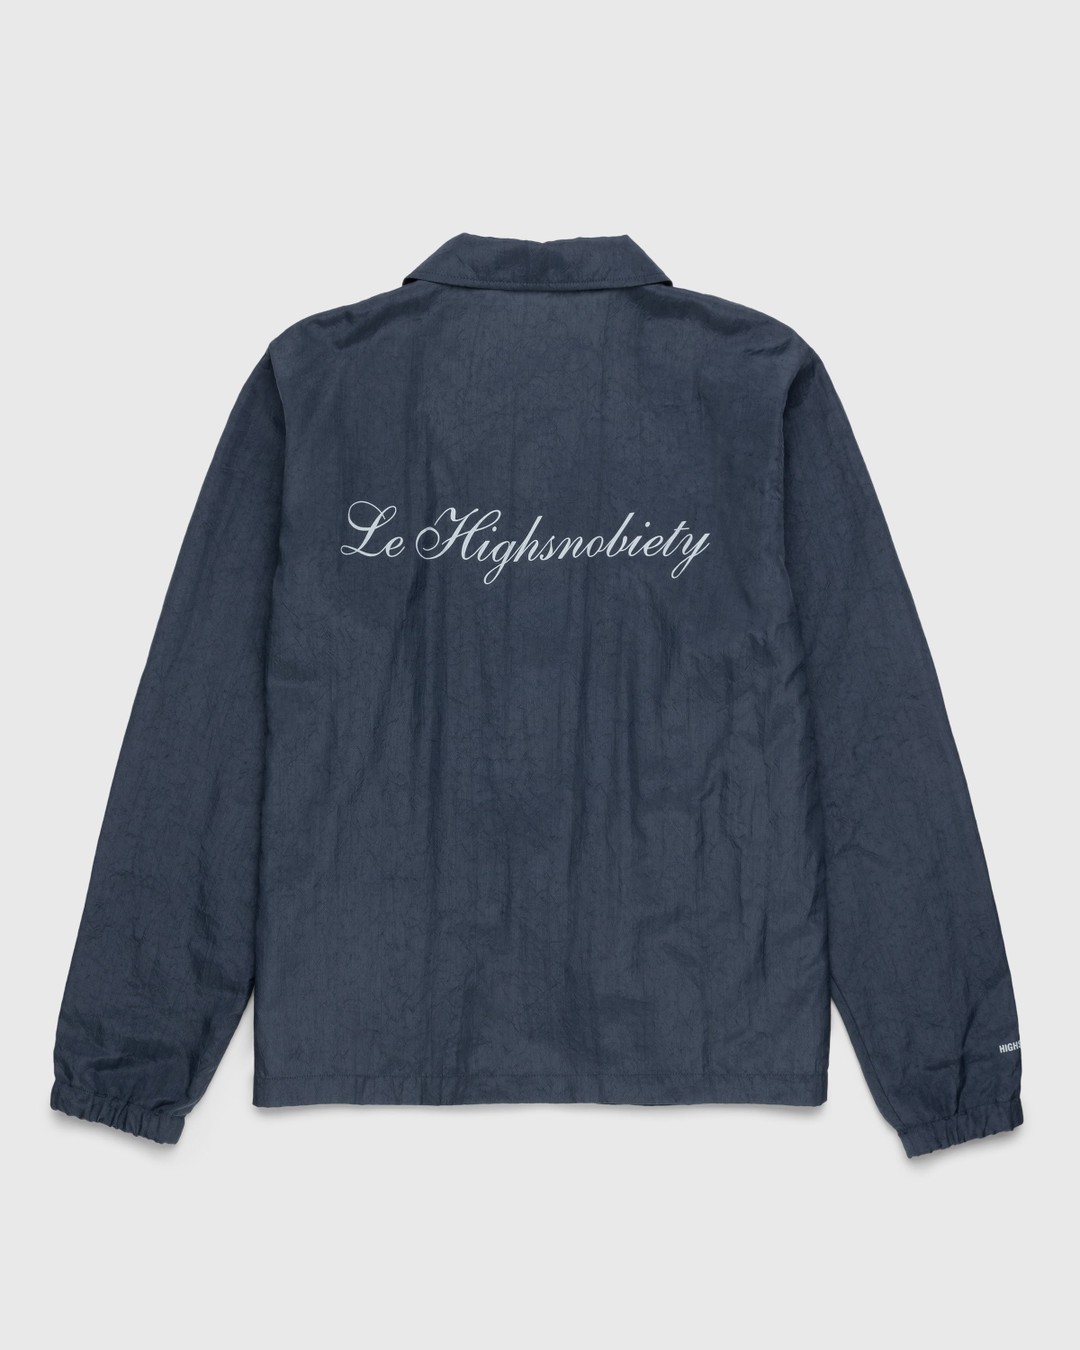 Highsnobiety – Not in Paris 5 Coach Jacket - Outerwear - Grey - Image 2